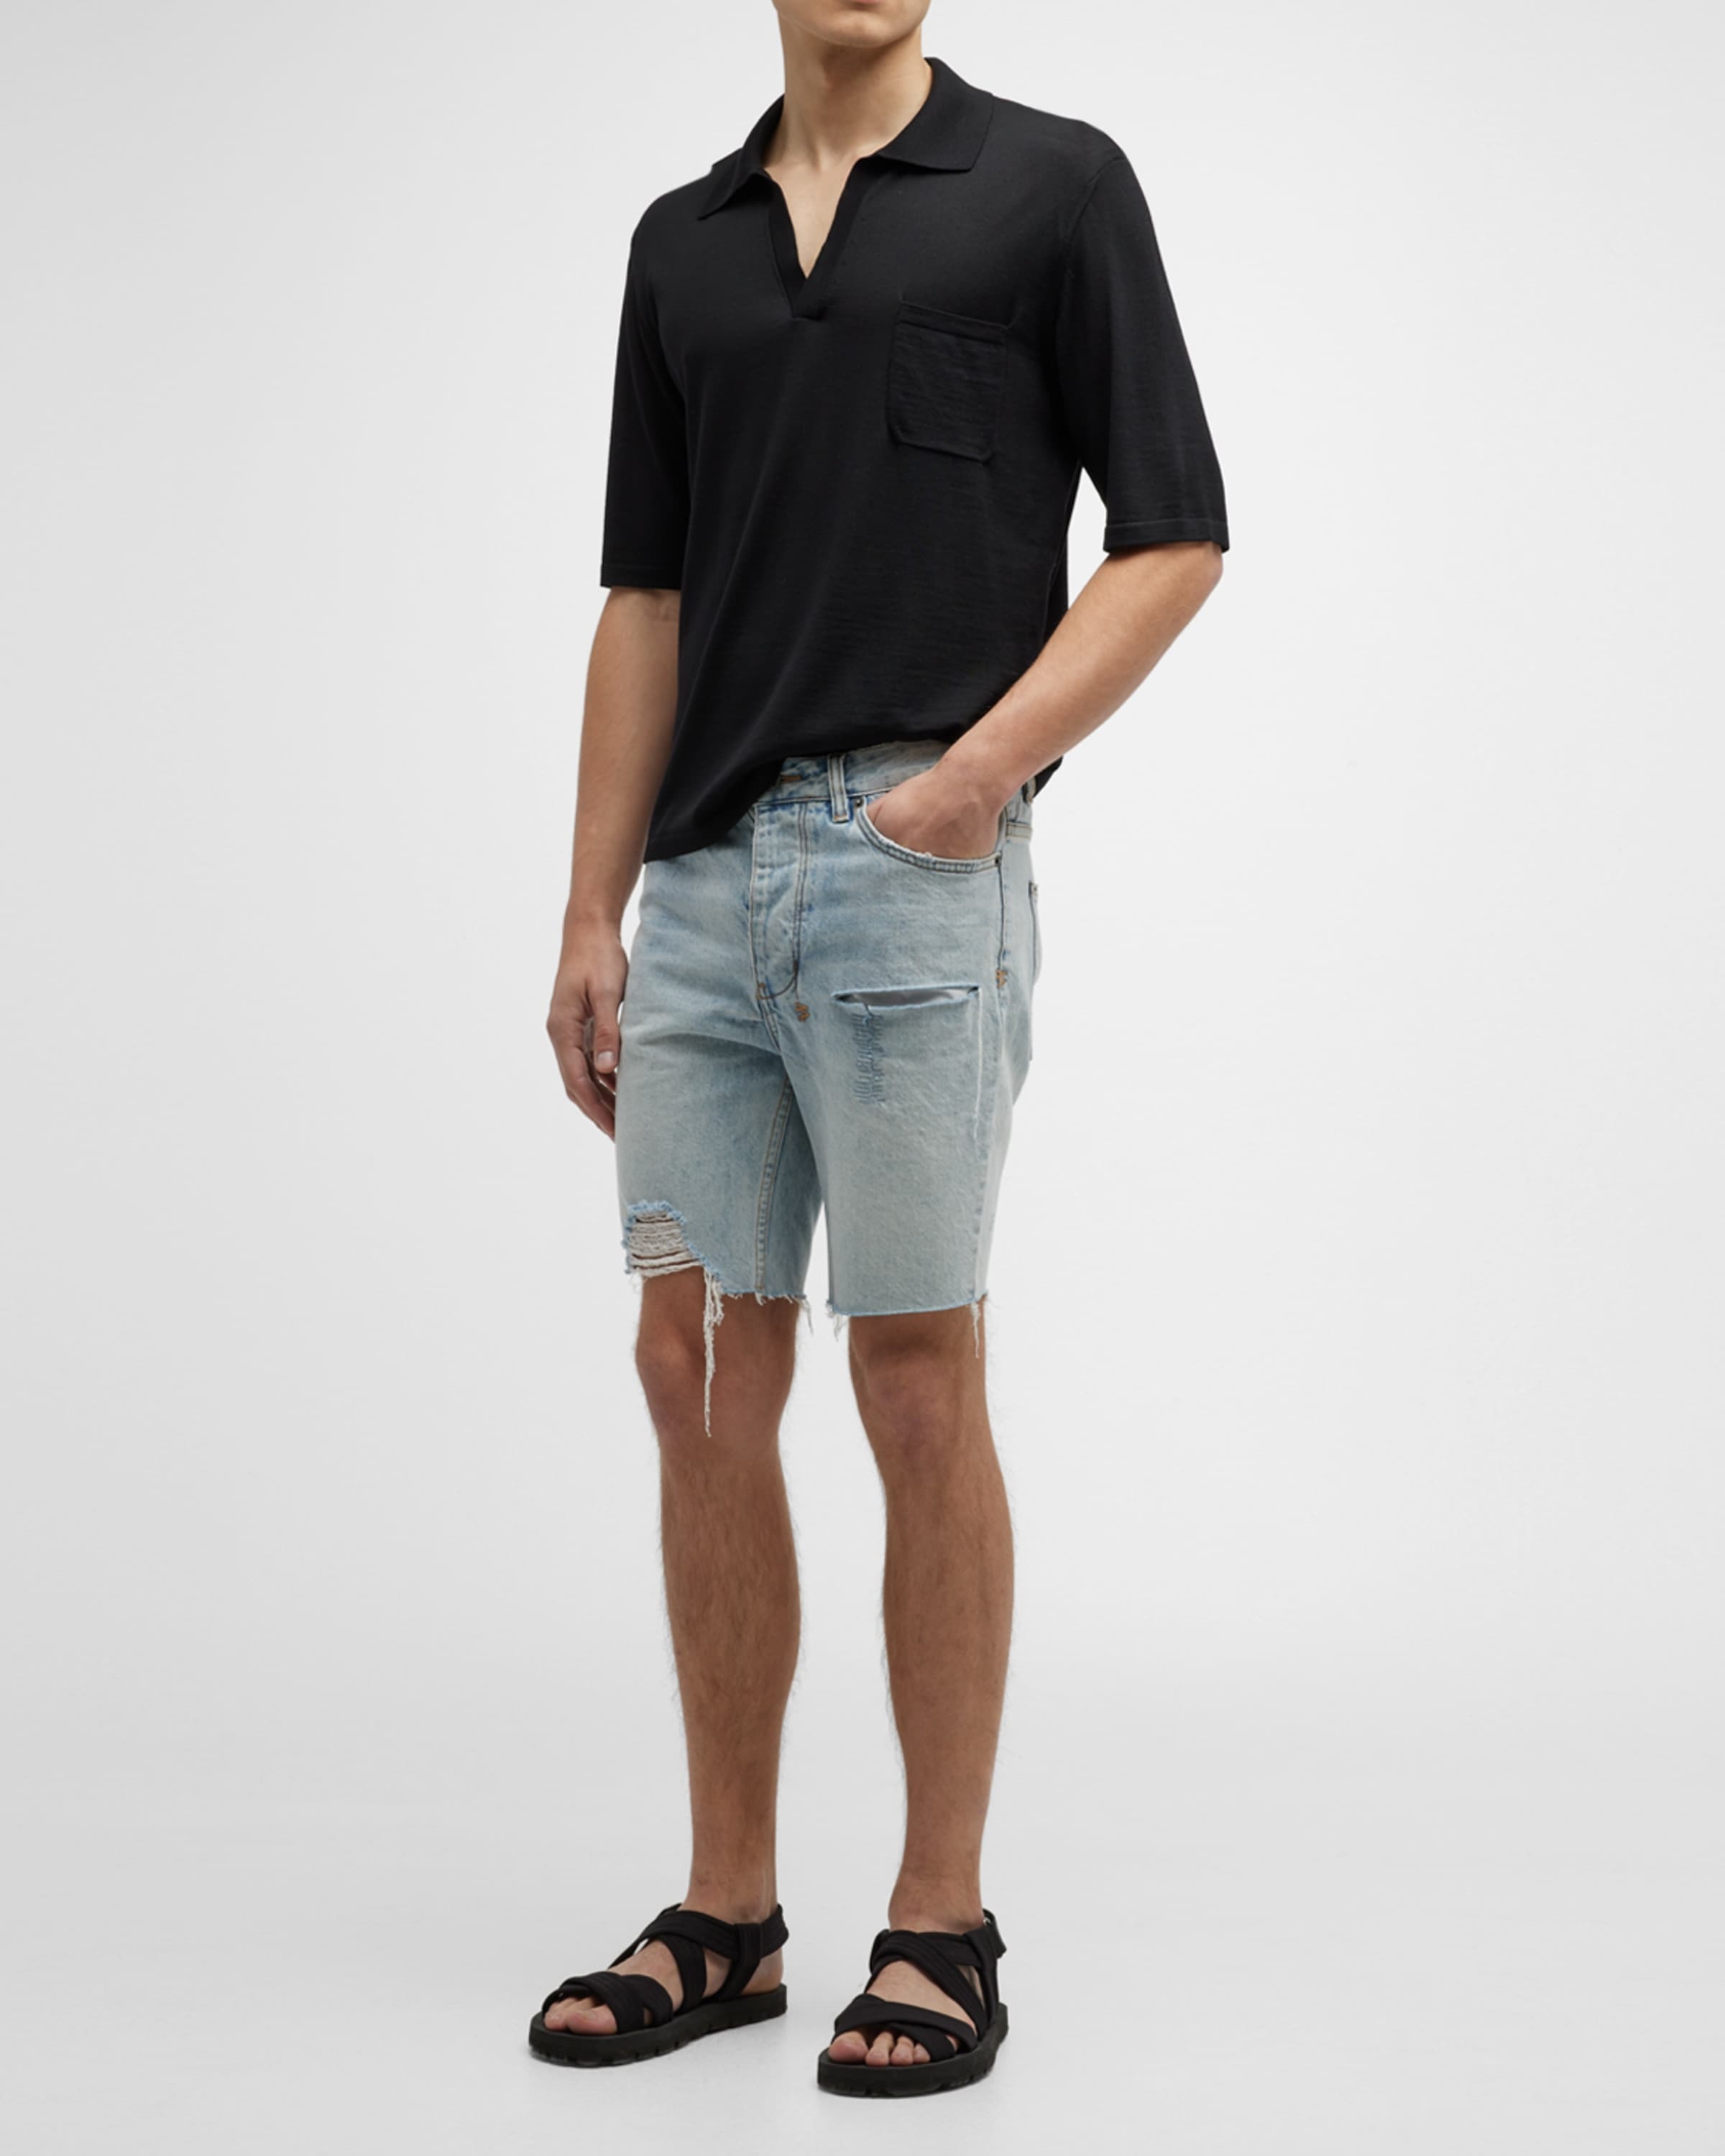 Men's Knit Polo Shirt with Open Collar - 3